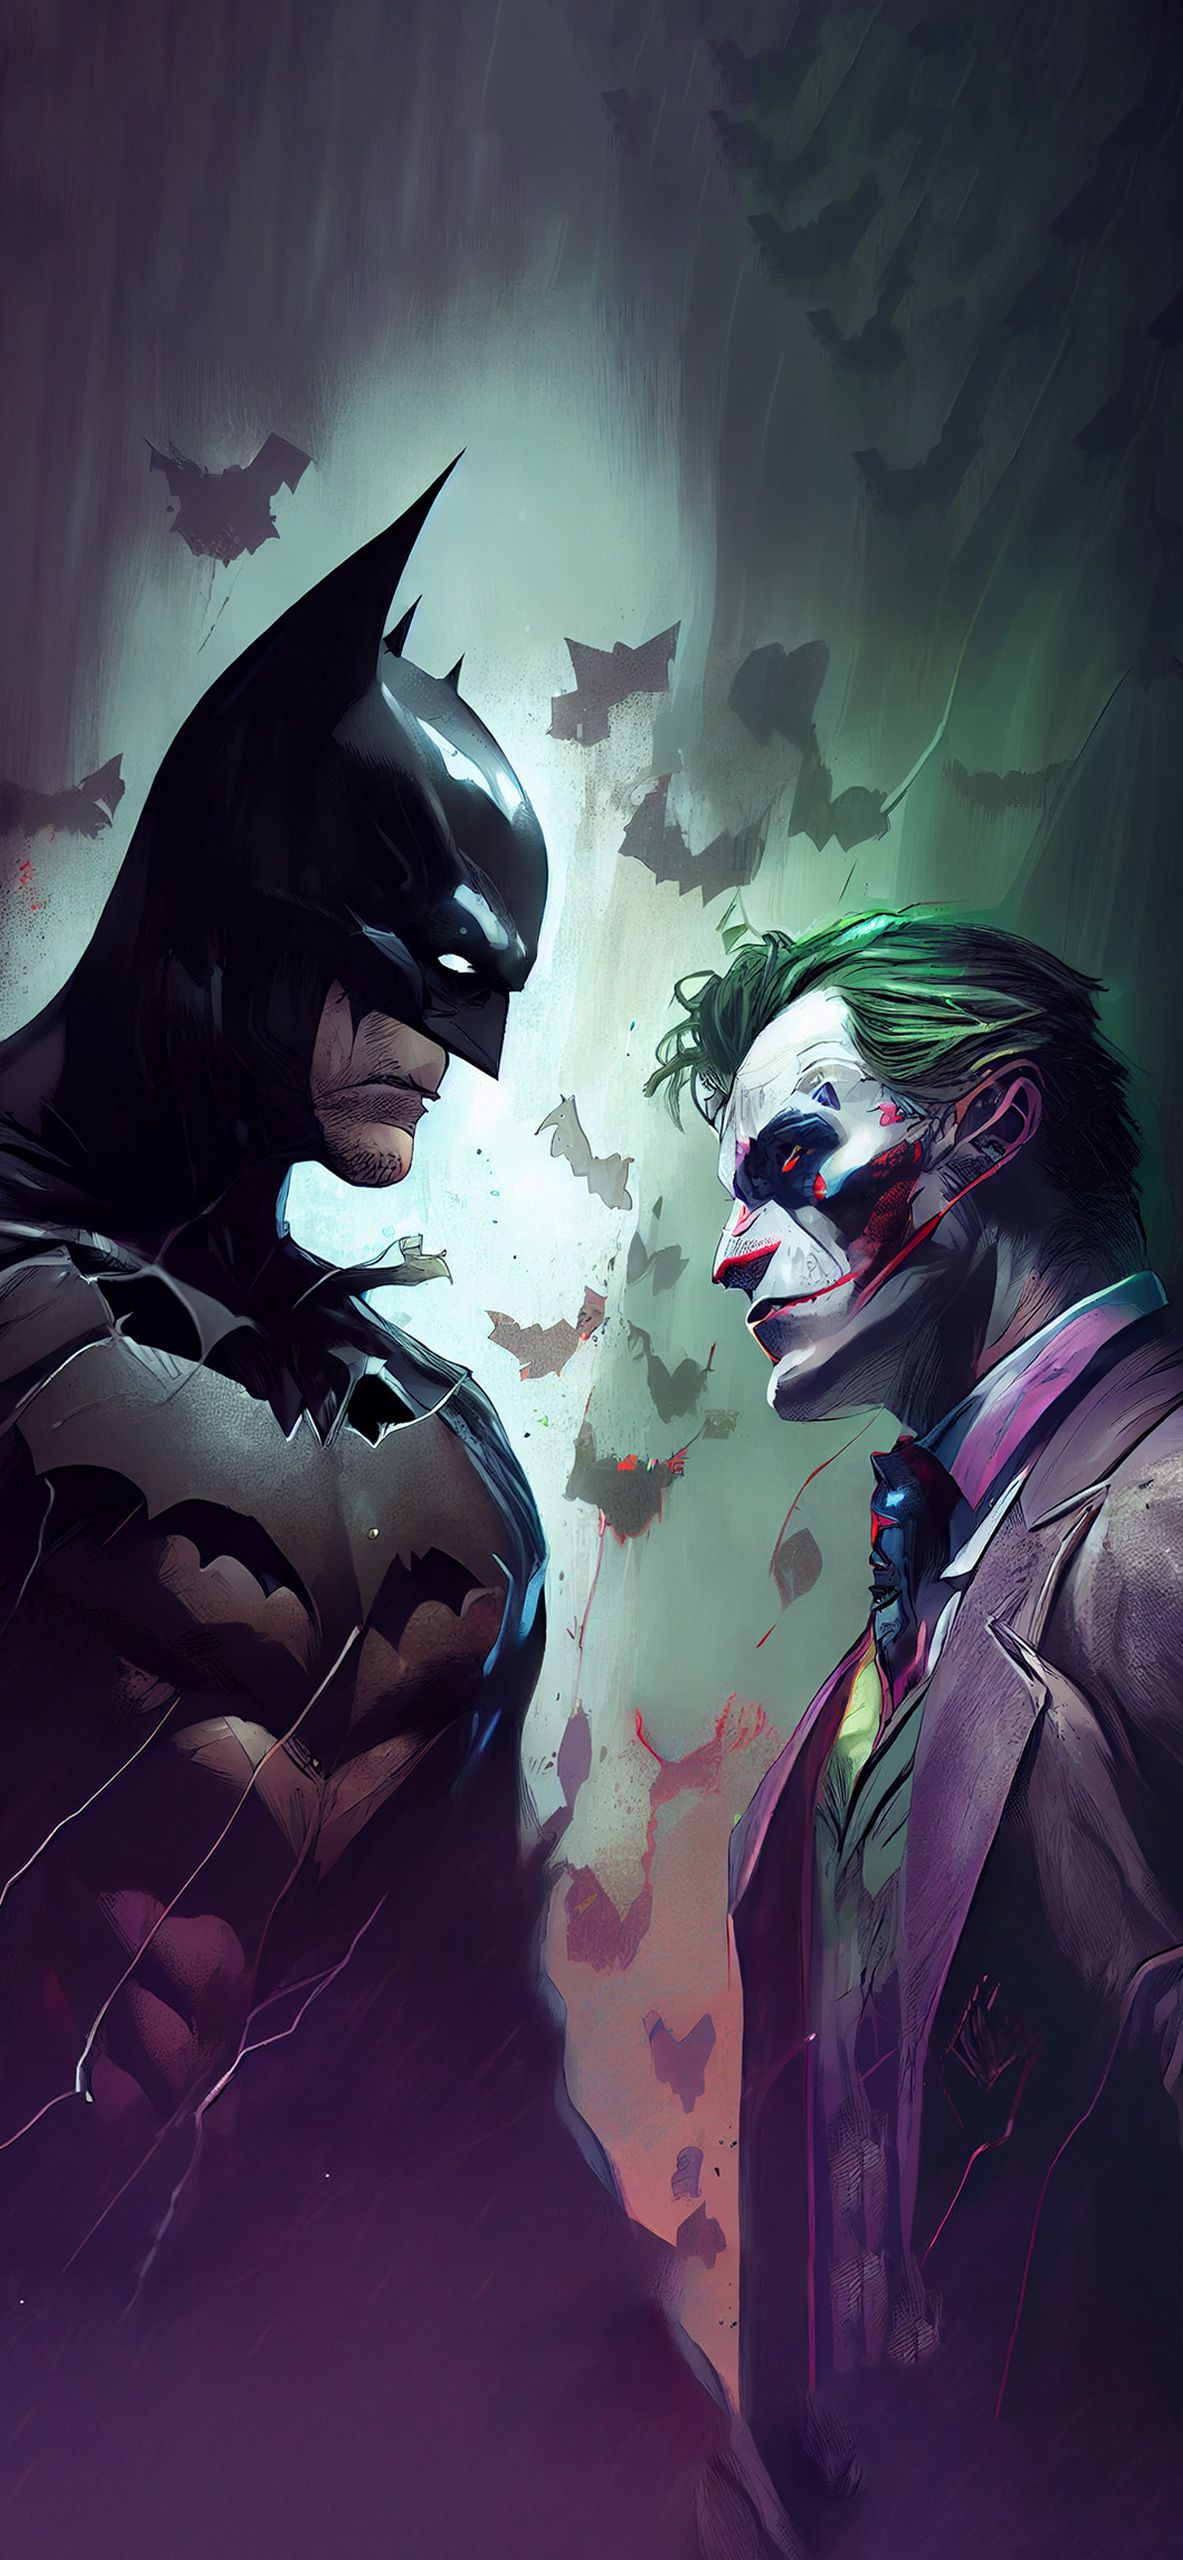  Joker Hintergrundbild 1183x2560. Batman vs Joker Aesthetic Wallpaper & Joker Wallpaper